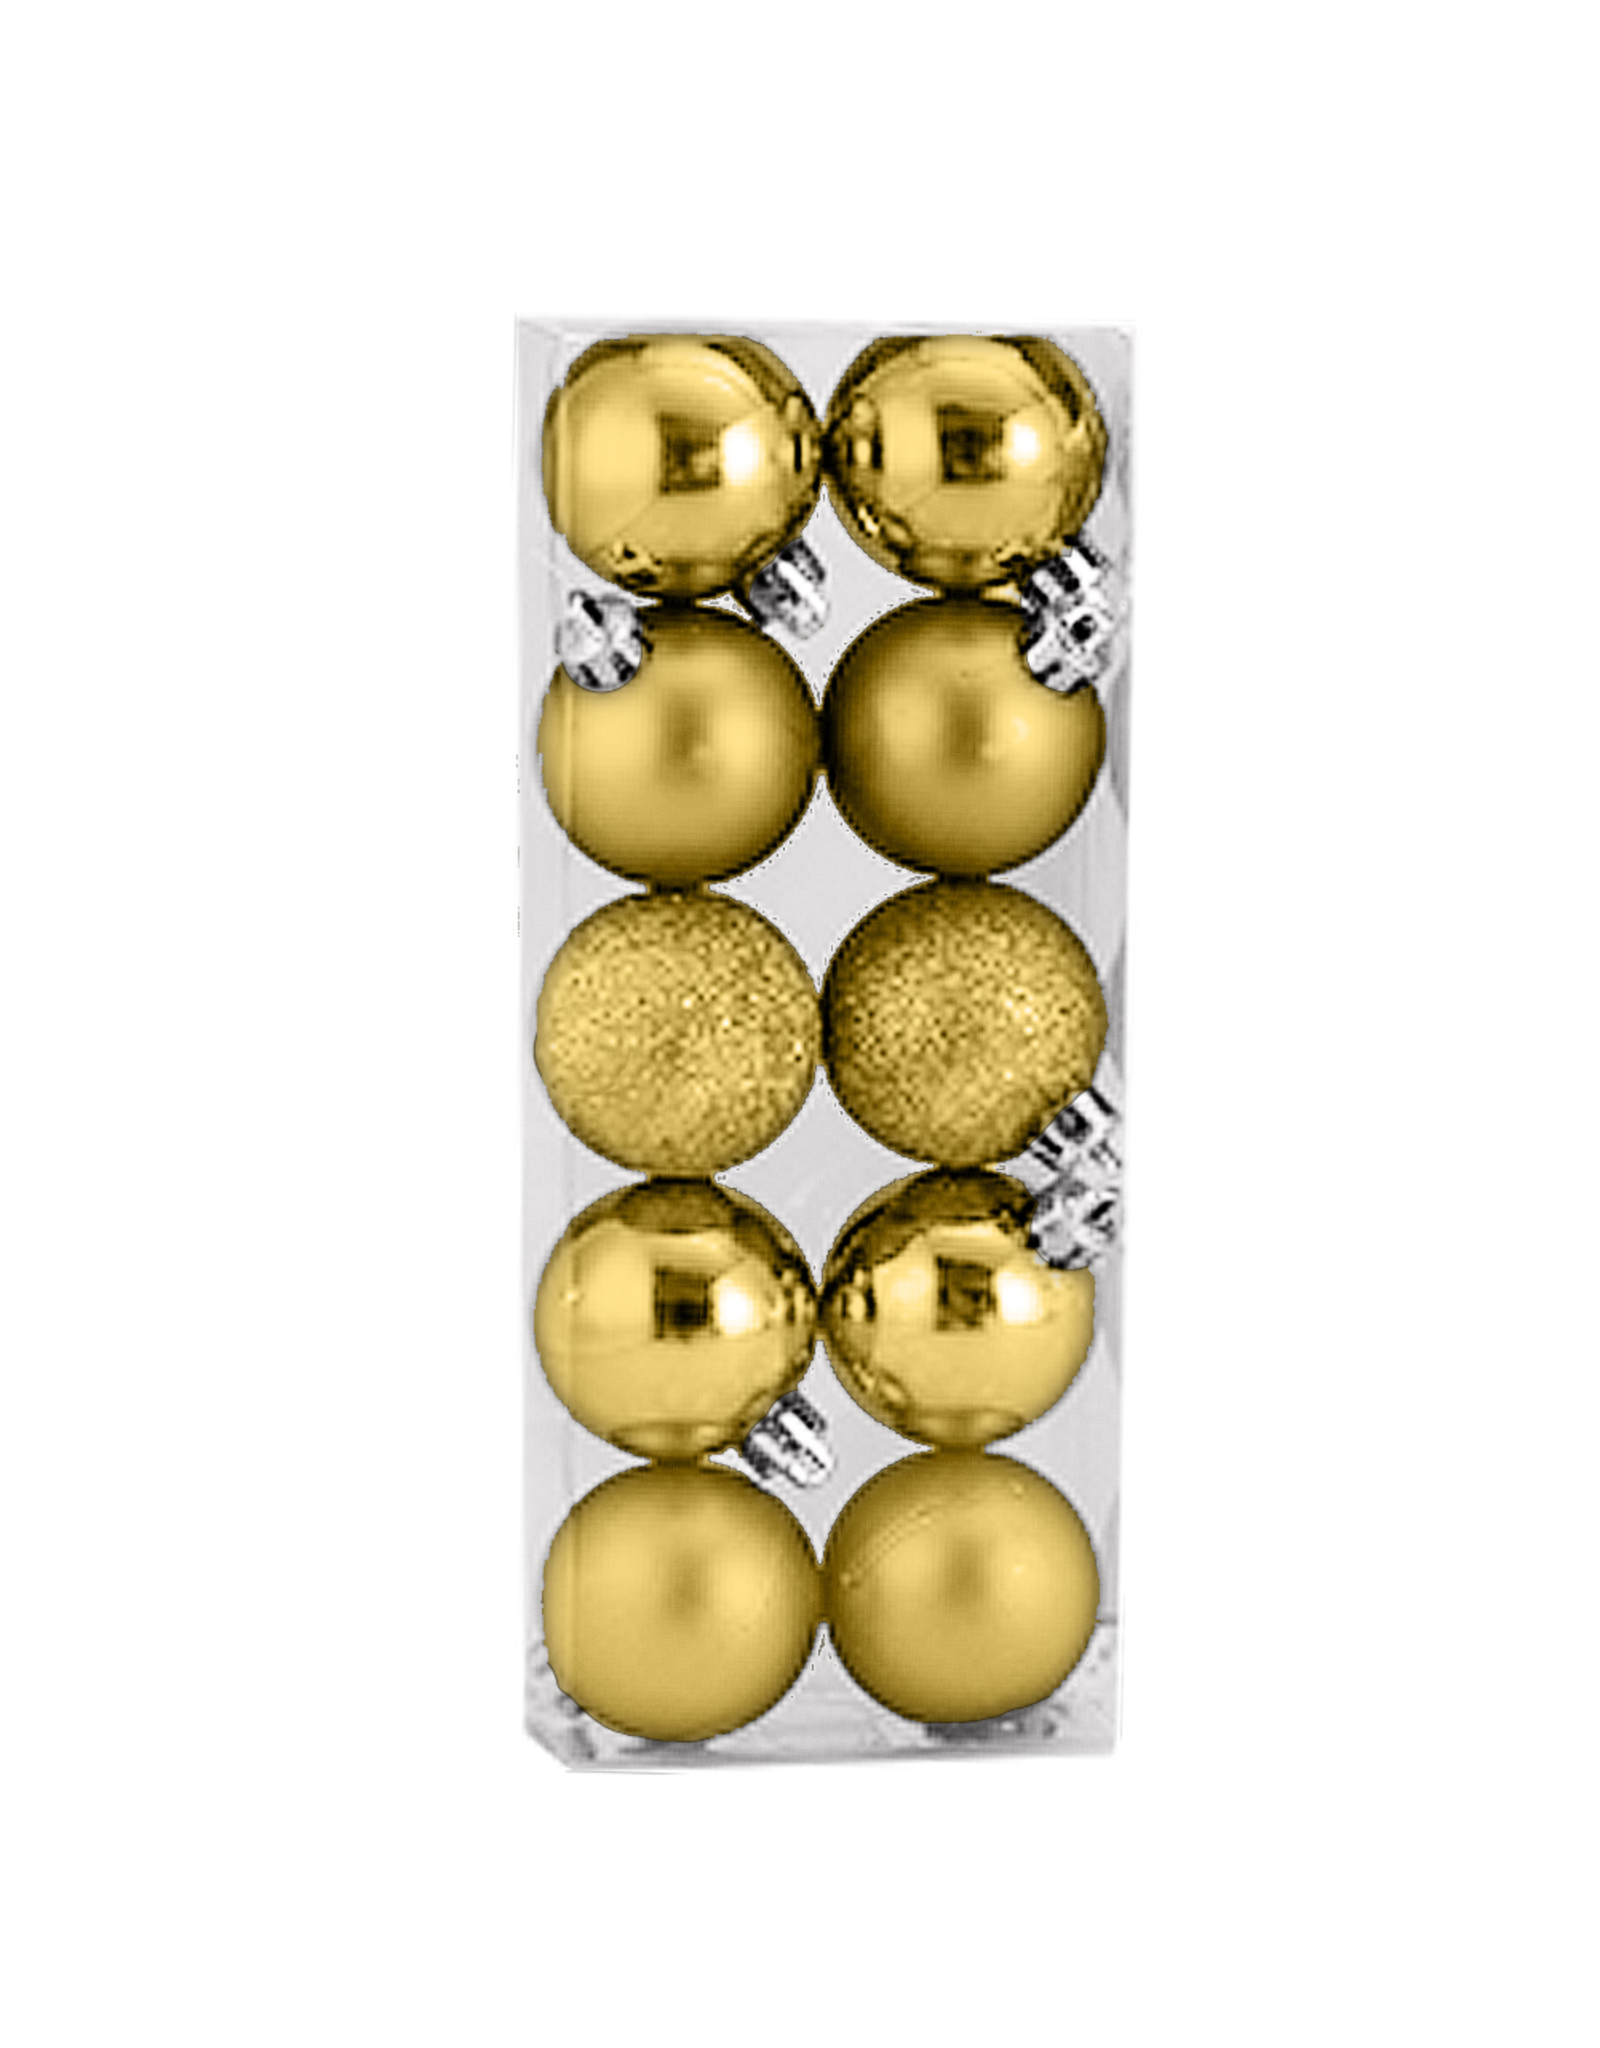 Kurt Adler Christmas Shatterproof Ball Ornaments 30MM 20Pk Gold